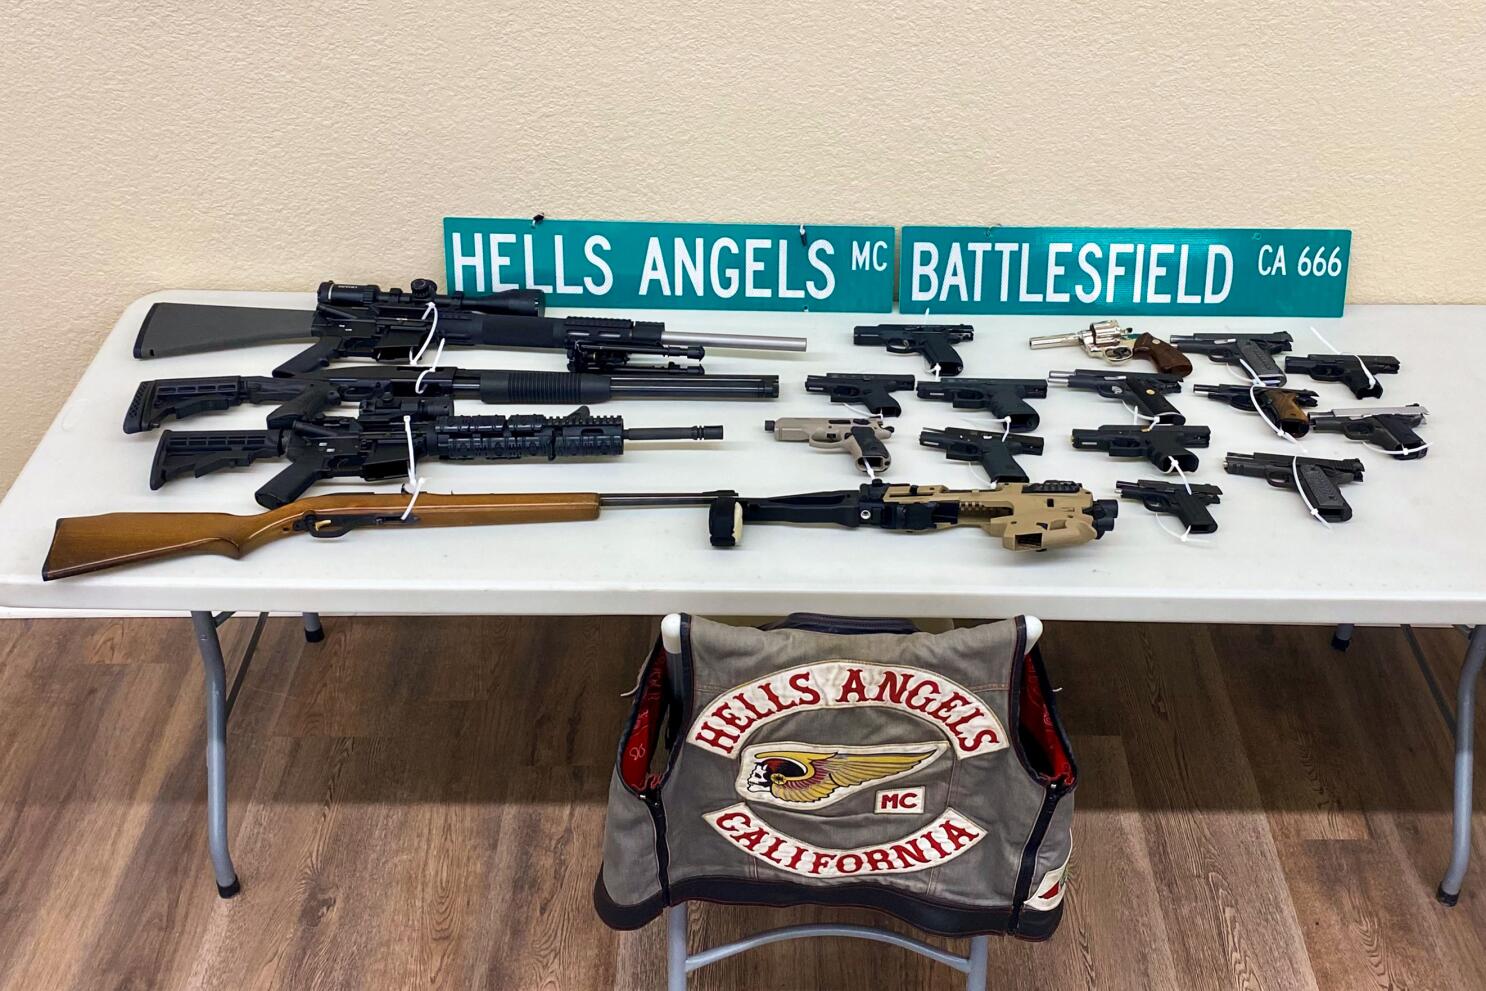 California Authorities Arrest 160 Members in Major Crackdown on Hells Angels Club